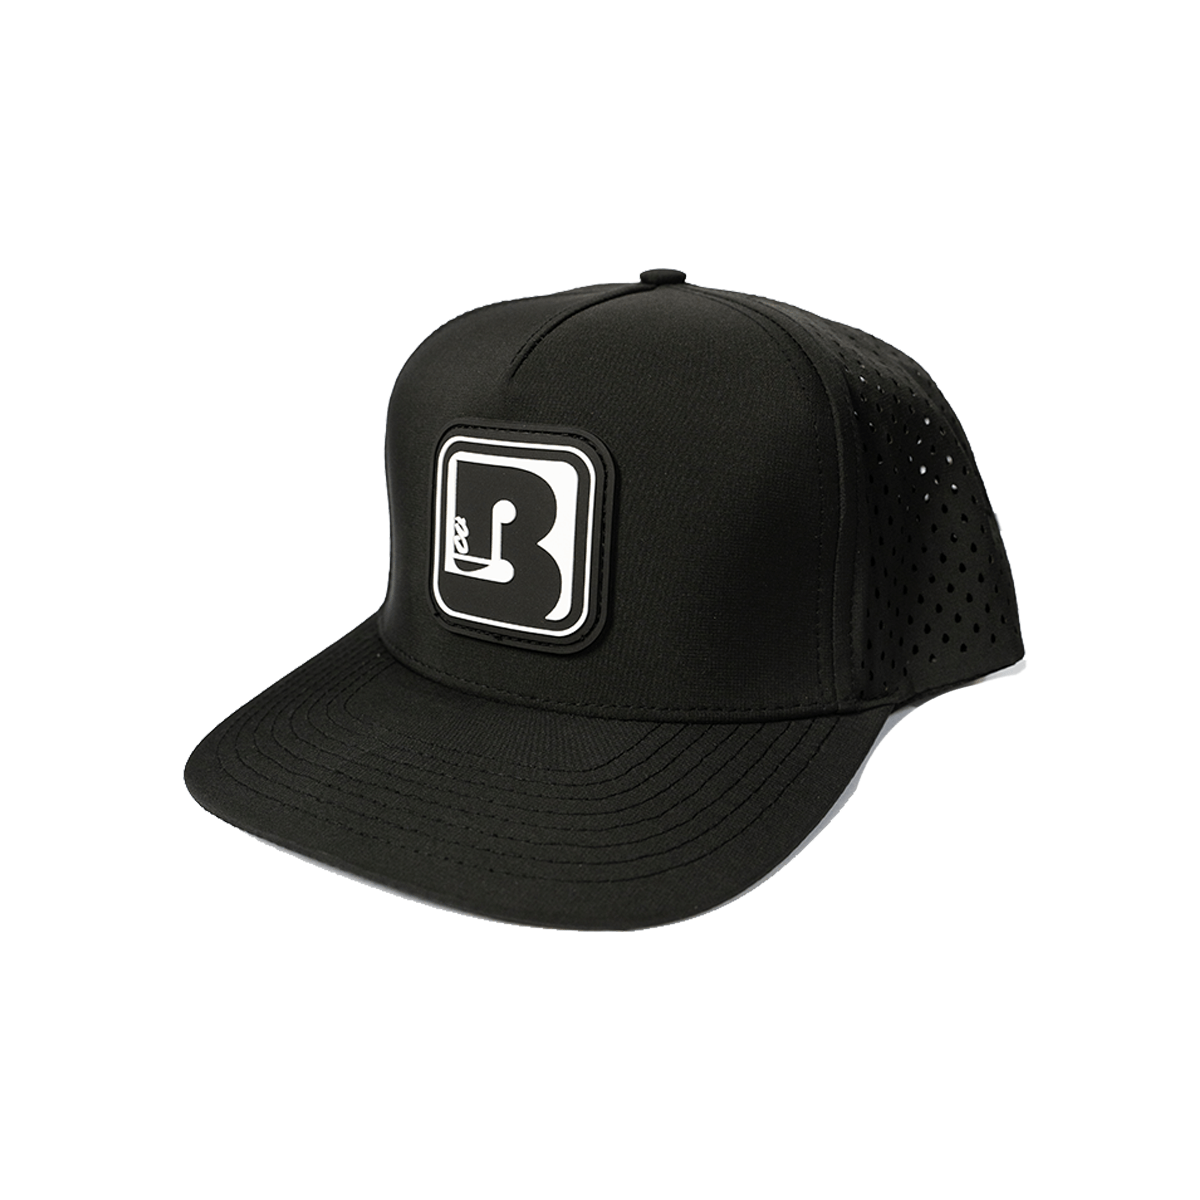 BoardCo Blackhawk Hat Black with B Patch - BoardCo